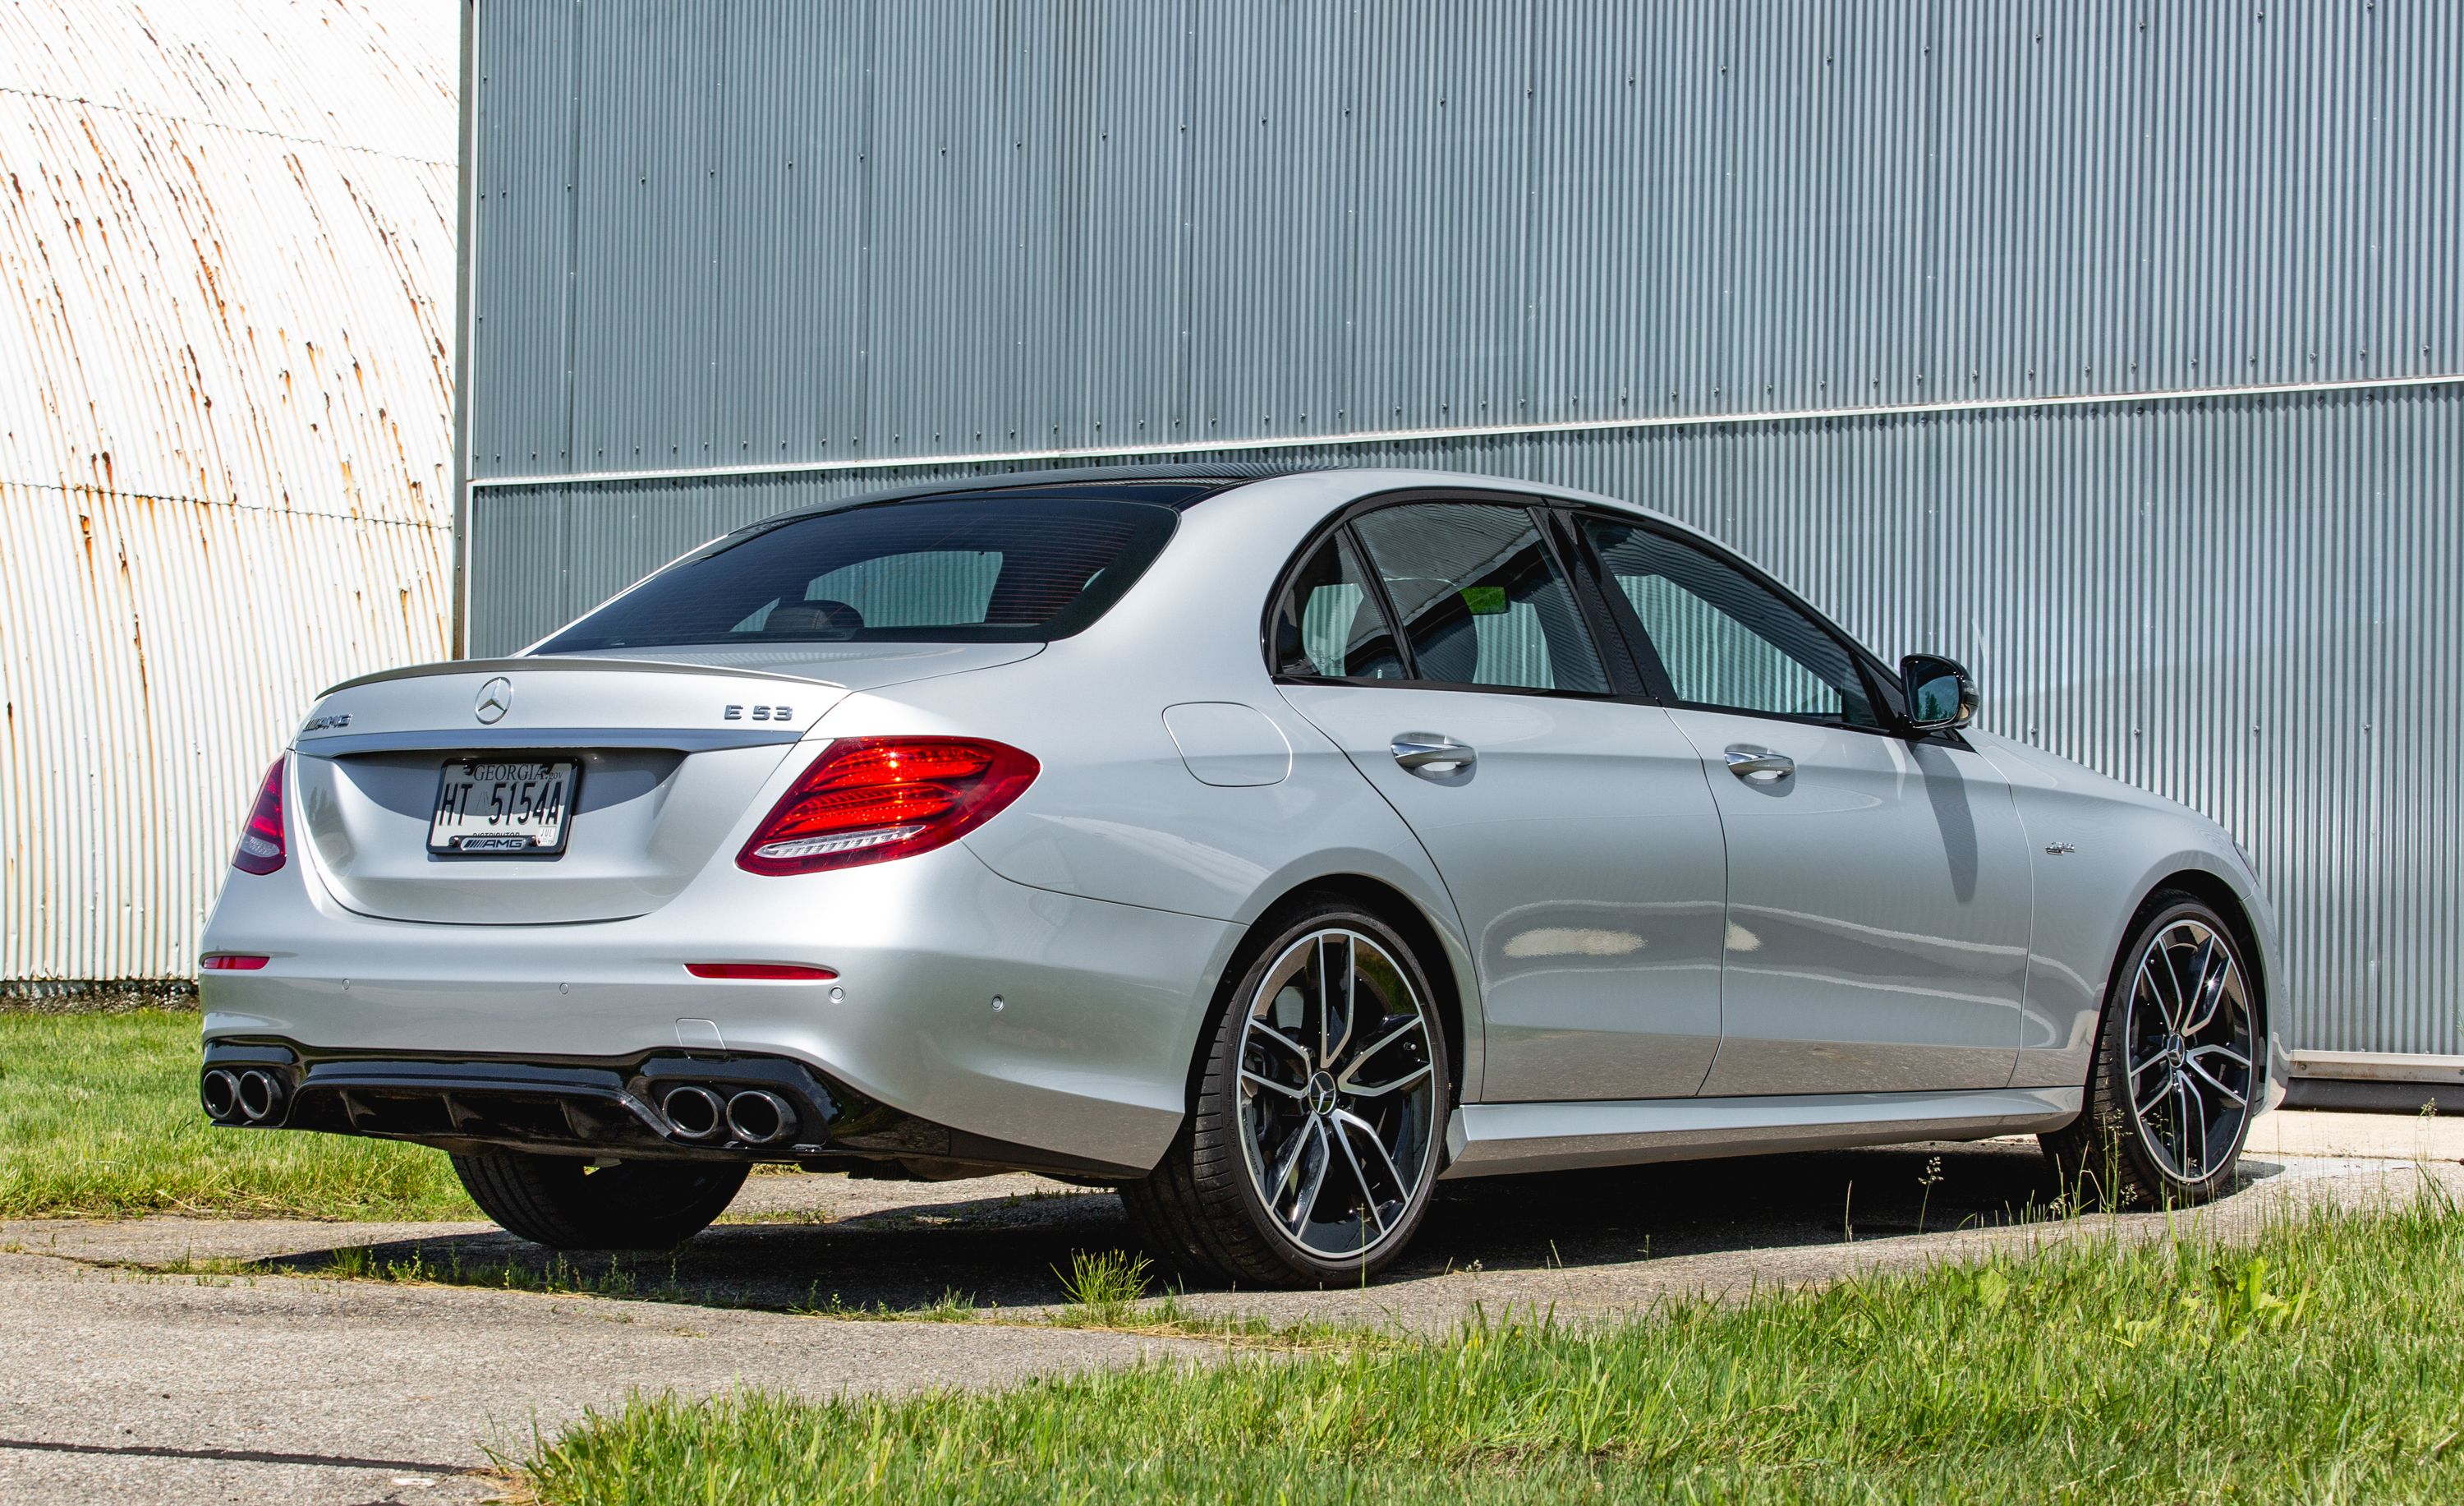 2019 Mercedes-AMG E53 Sedan – Refined Performance and Luxury